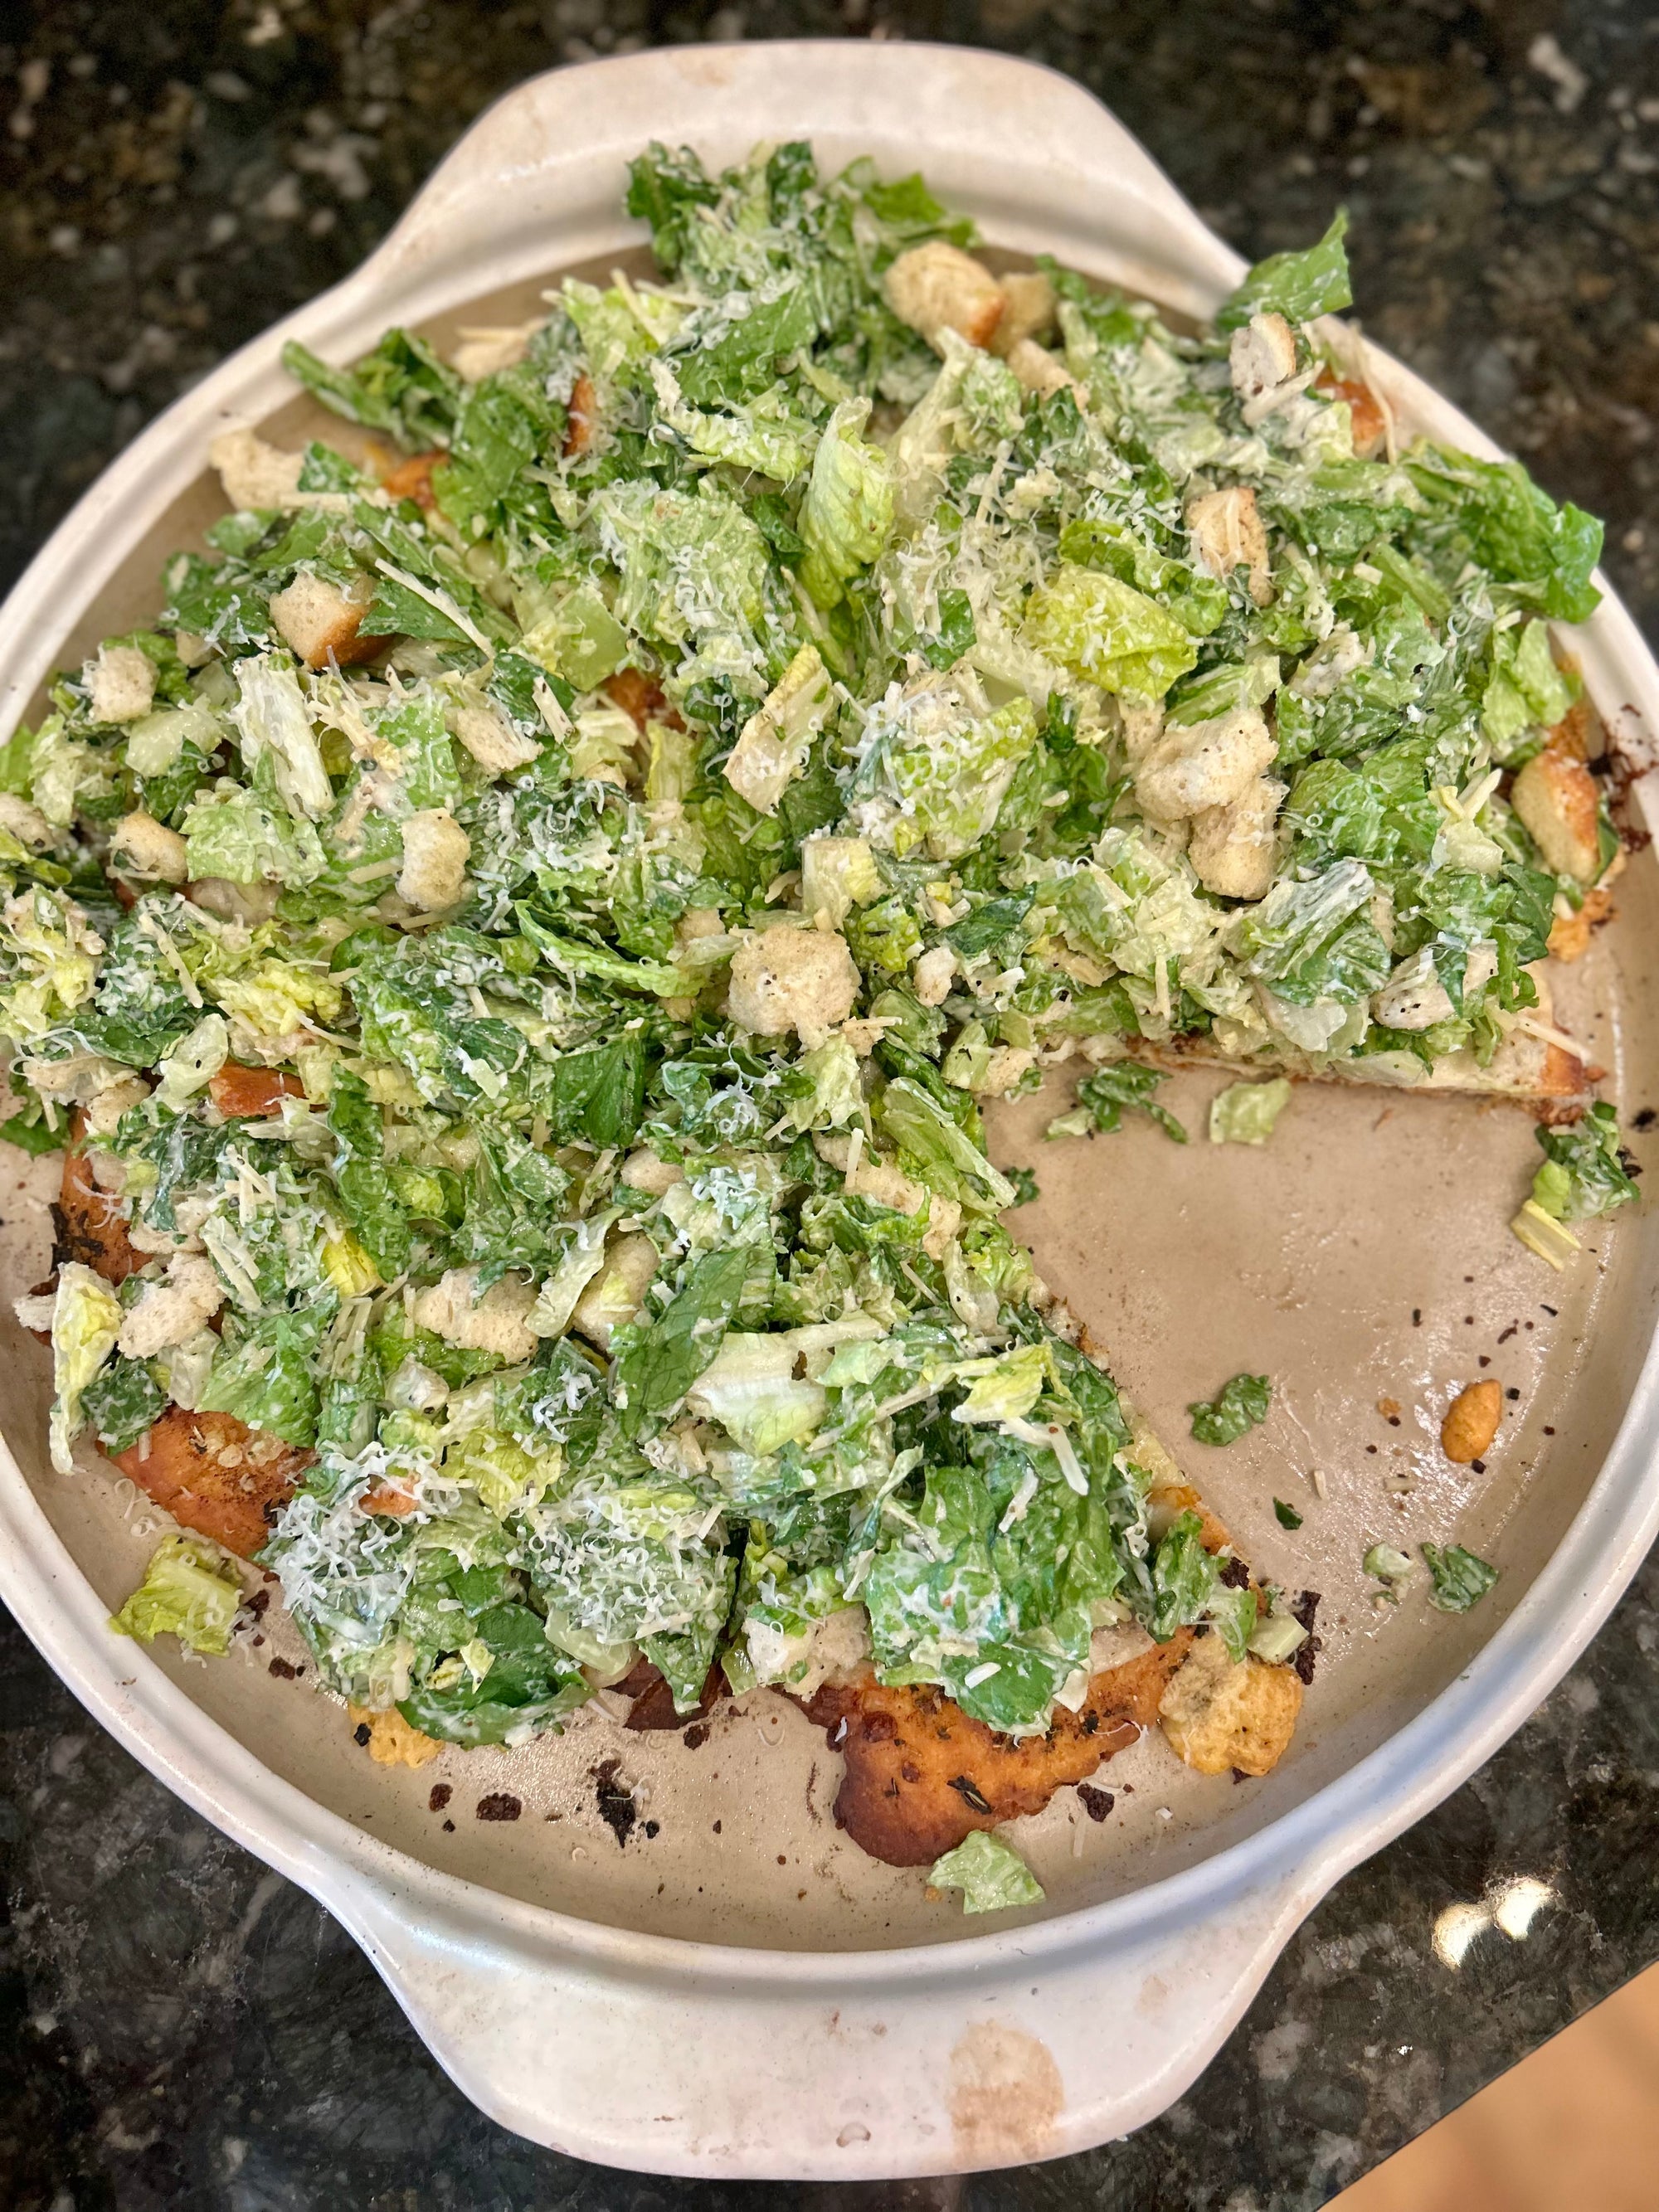 Chopped Caesar Salad Pizza